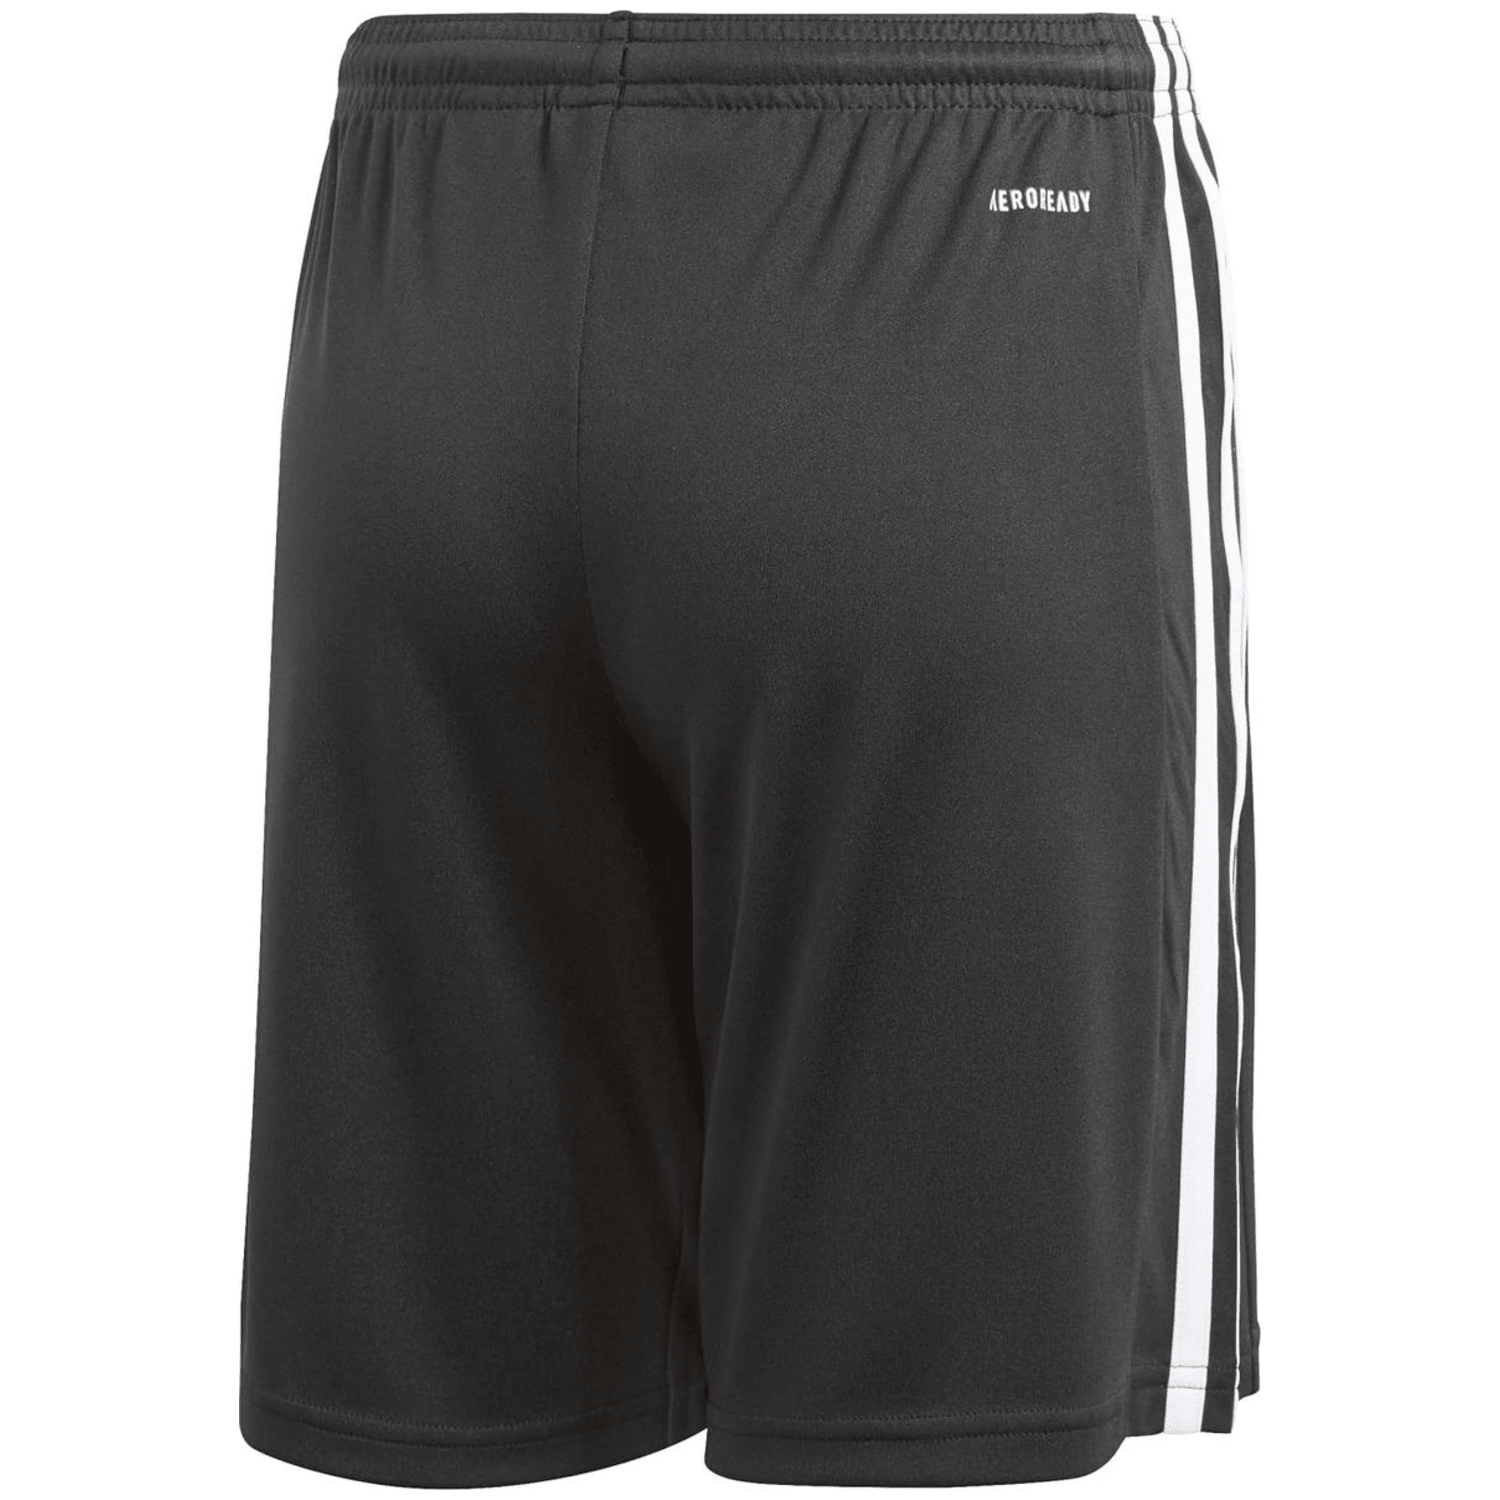 Adidas Squadra 21 Shorts Jungen